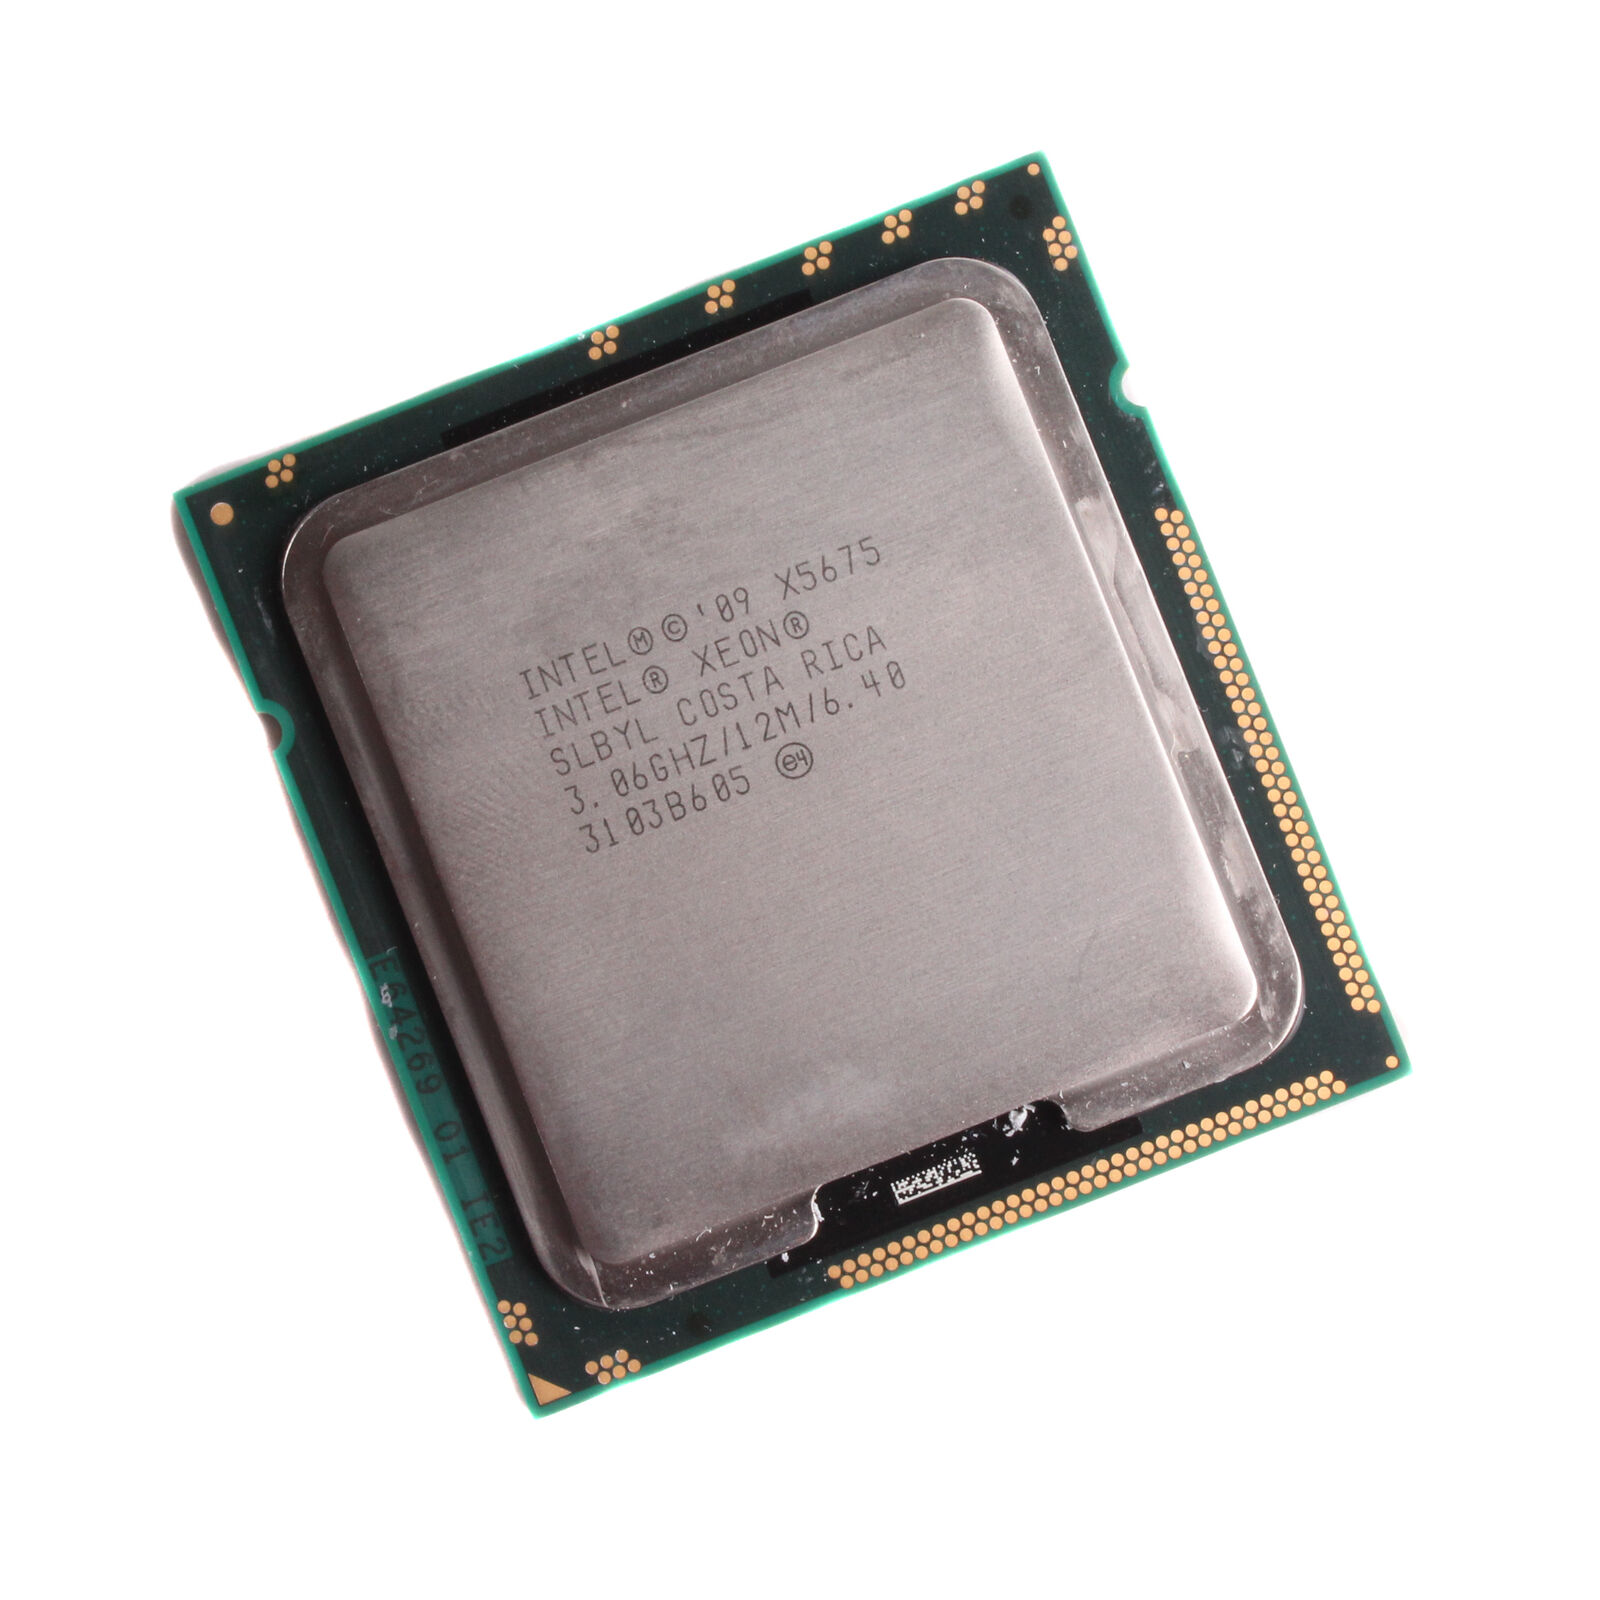 Intel Xeon CPU X5675 3.06GHz 12MB Cache 6 Core Socket LGA1366 Processor SLBYL